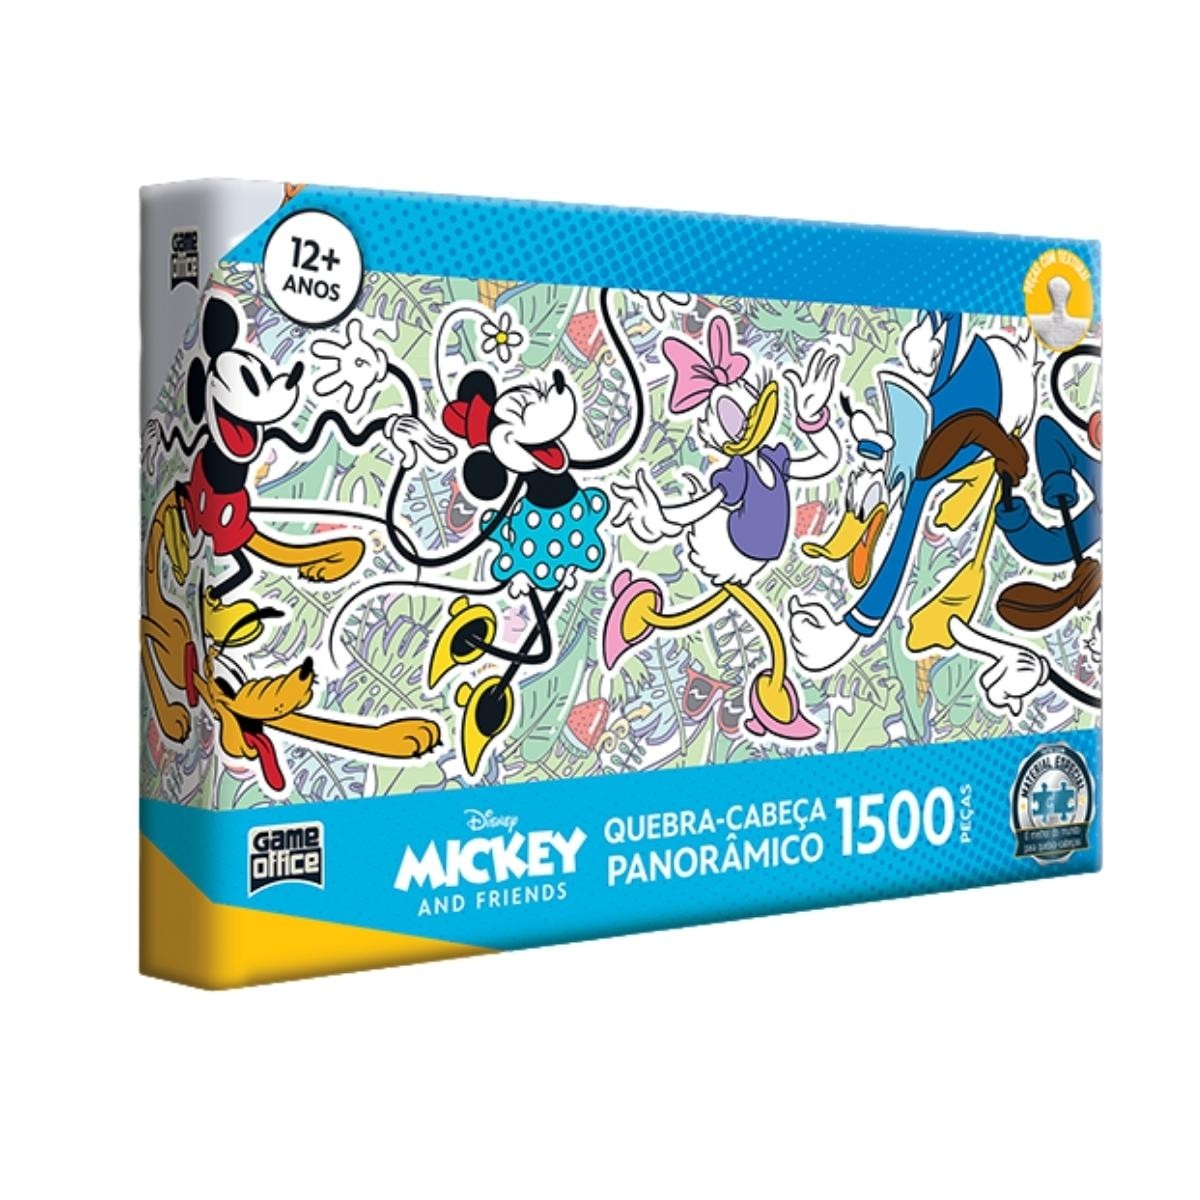 Quebra - Cabeça Panorâmico 1500 peças Turma do Mickey - Toyster